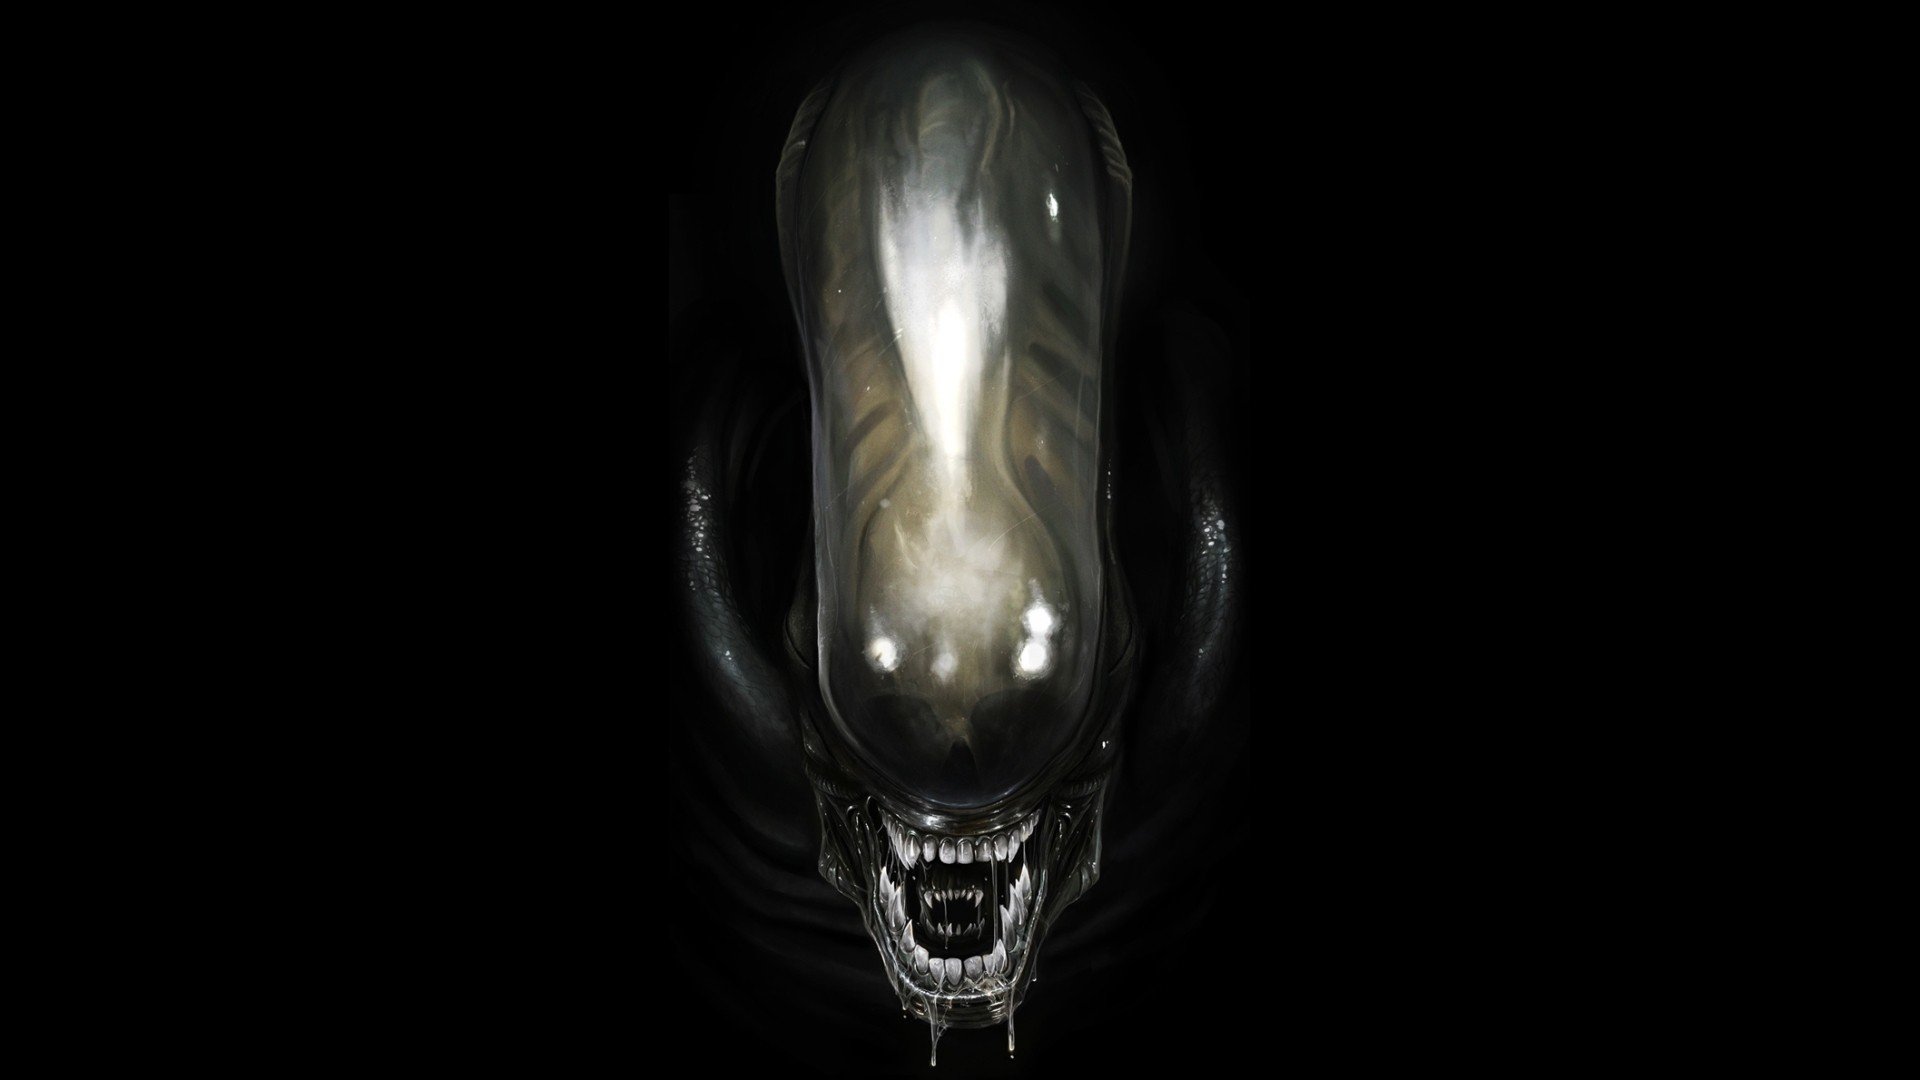 Best Alien Movie wallpaper ID:25249 for High Resolution hd 1080p PC